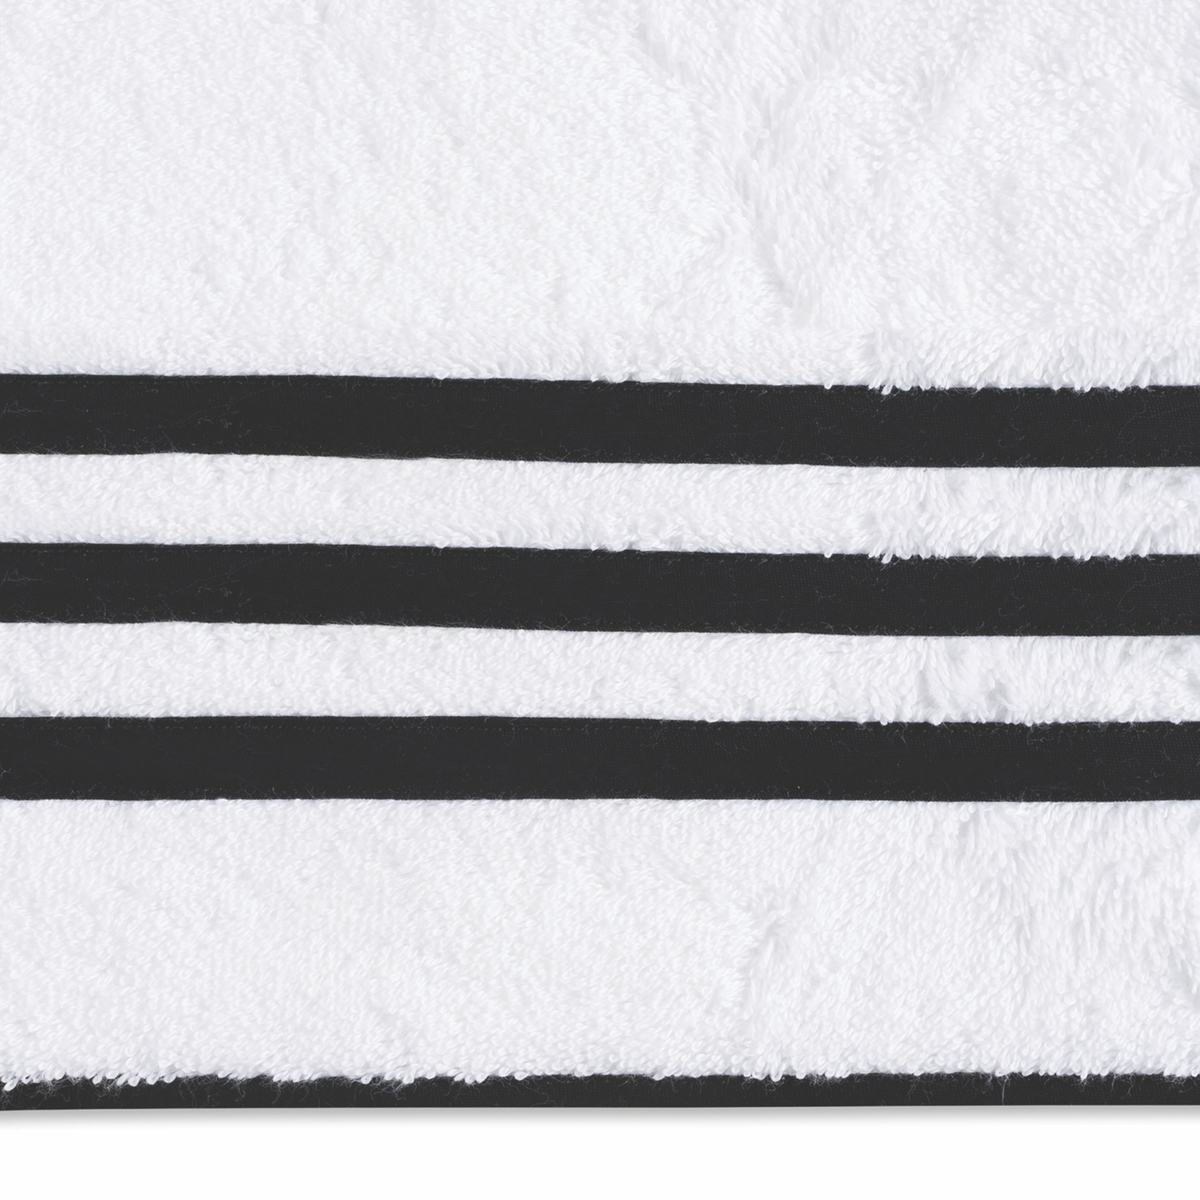 Swatch Sample of Matouk Newport Bath Towels and Mat Black Color